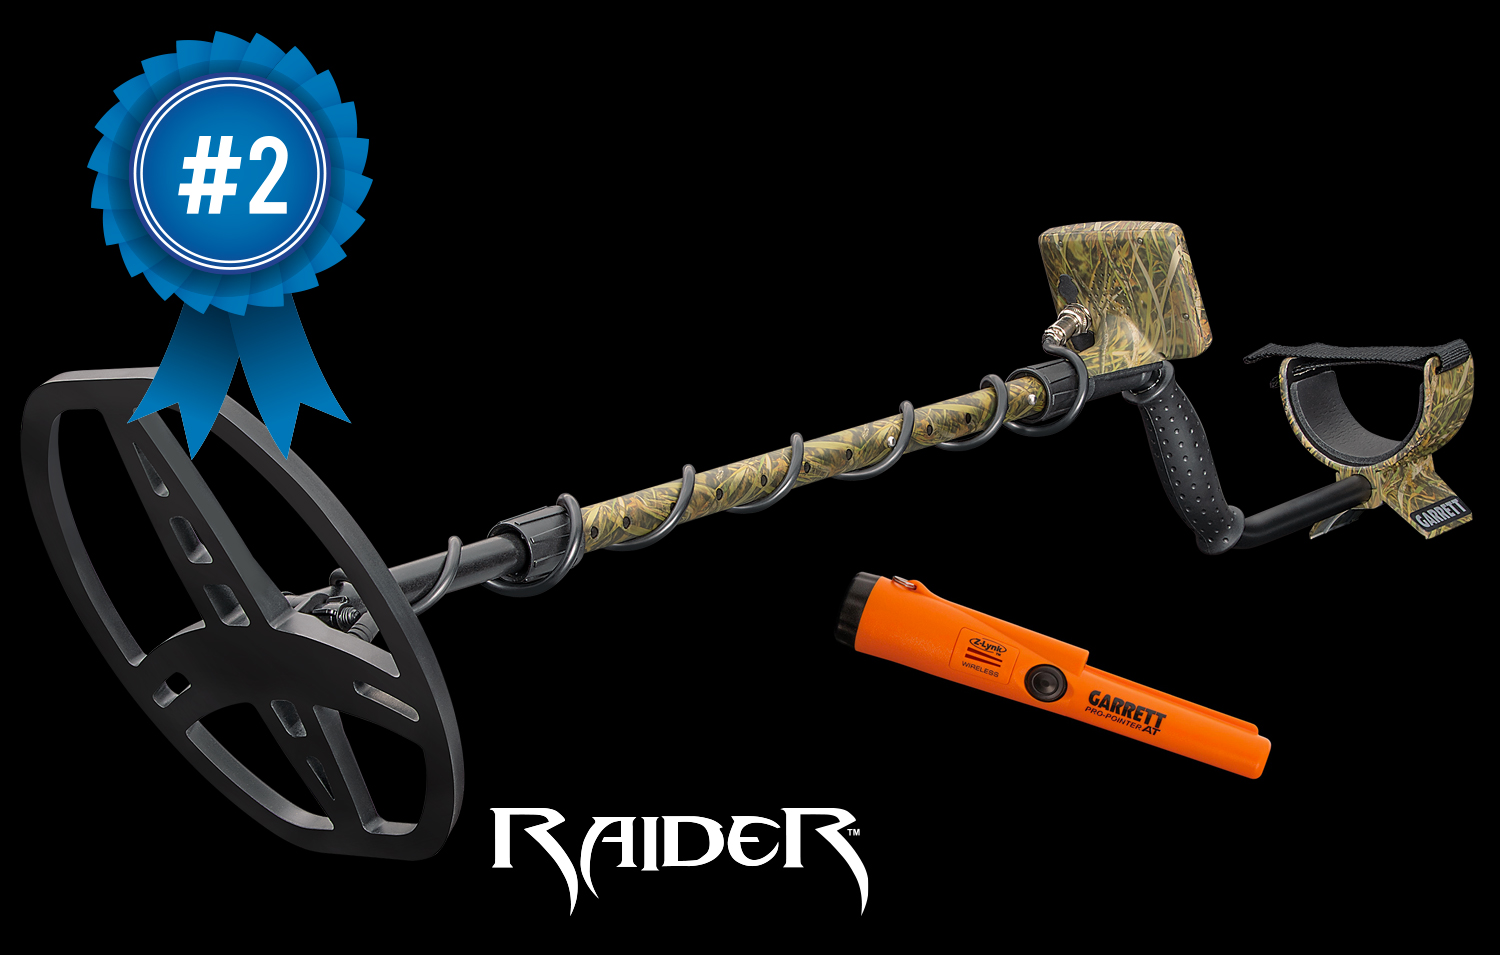 secondo-premio-garrett-contest-garrett-apex-raider